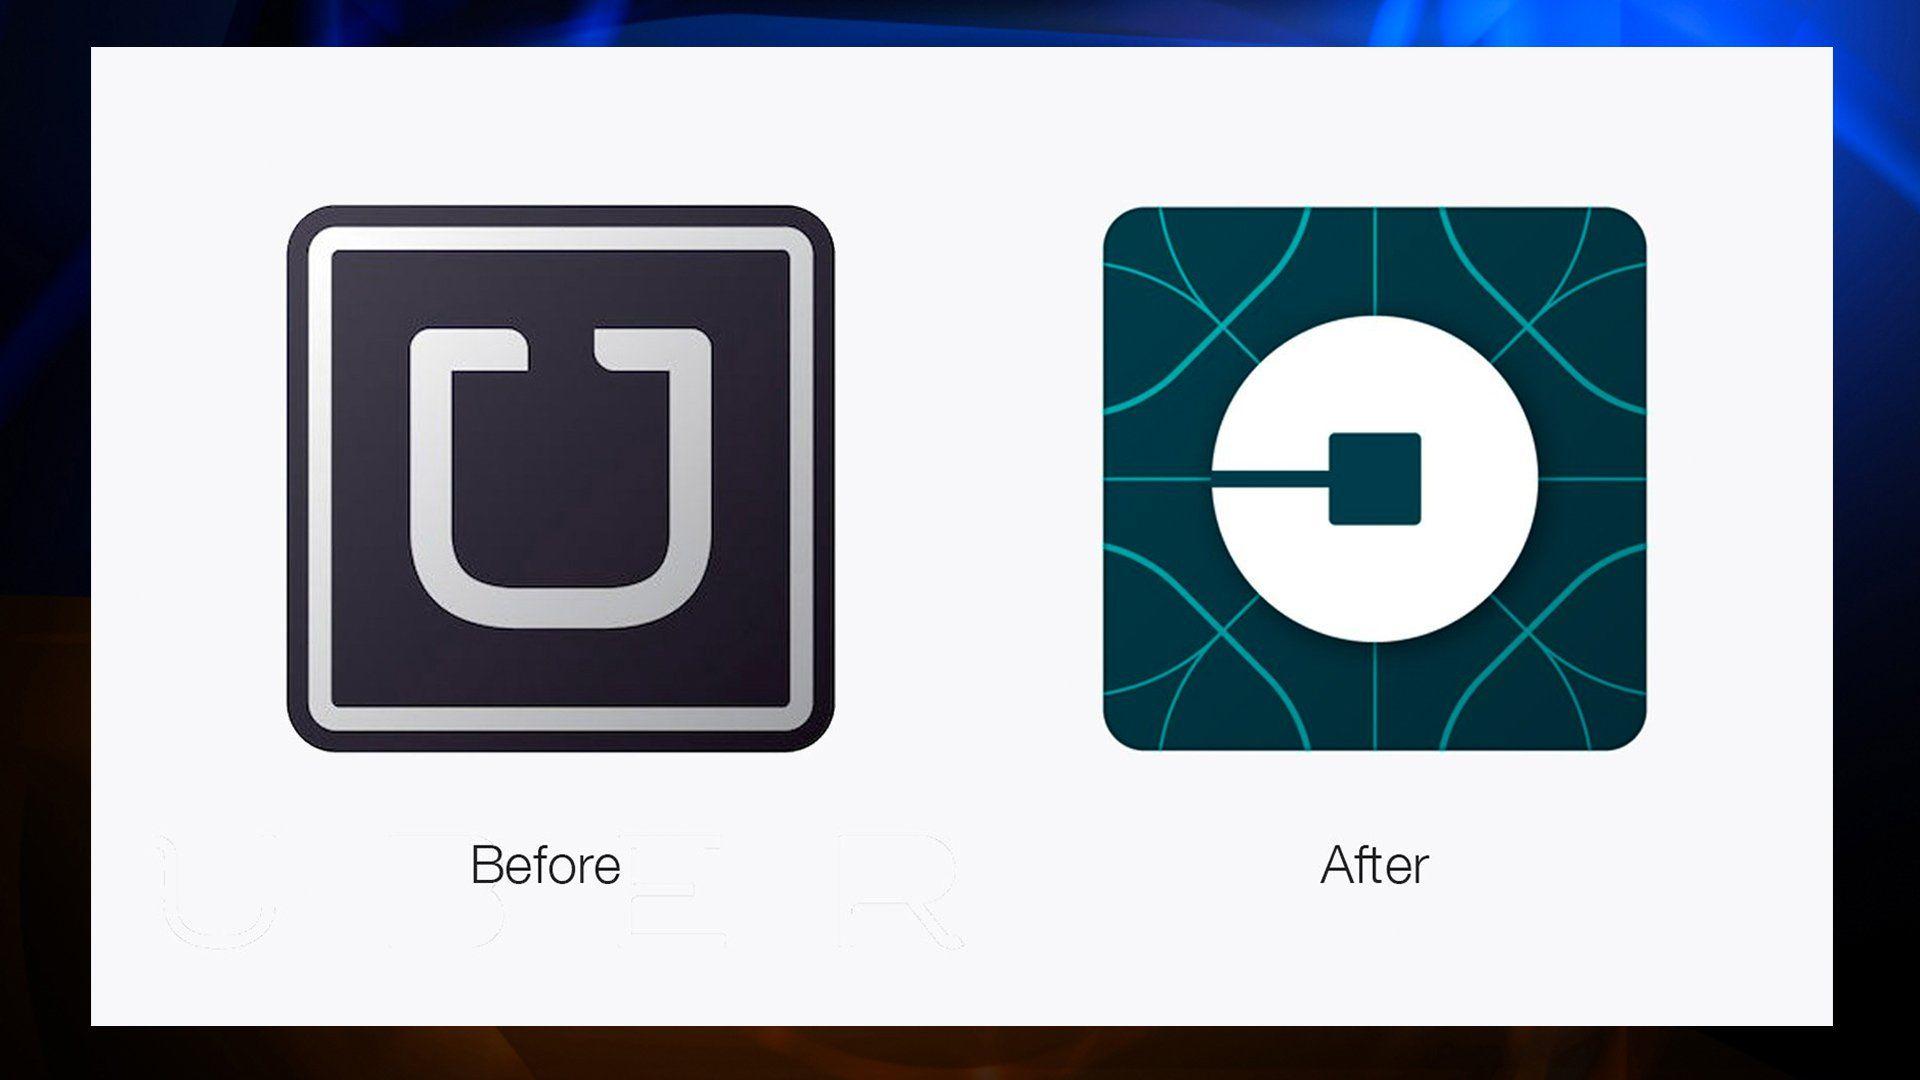 Uber White Logo - Uber Drops White and Black U Logo, Introduces New App Image